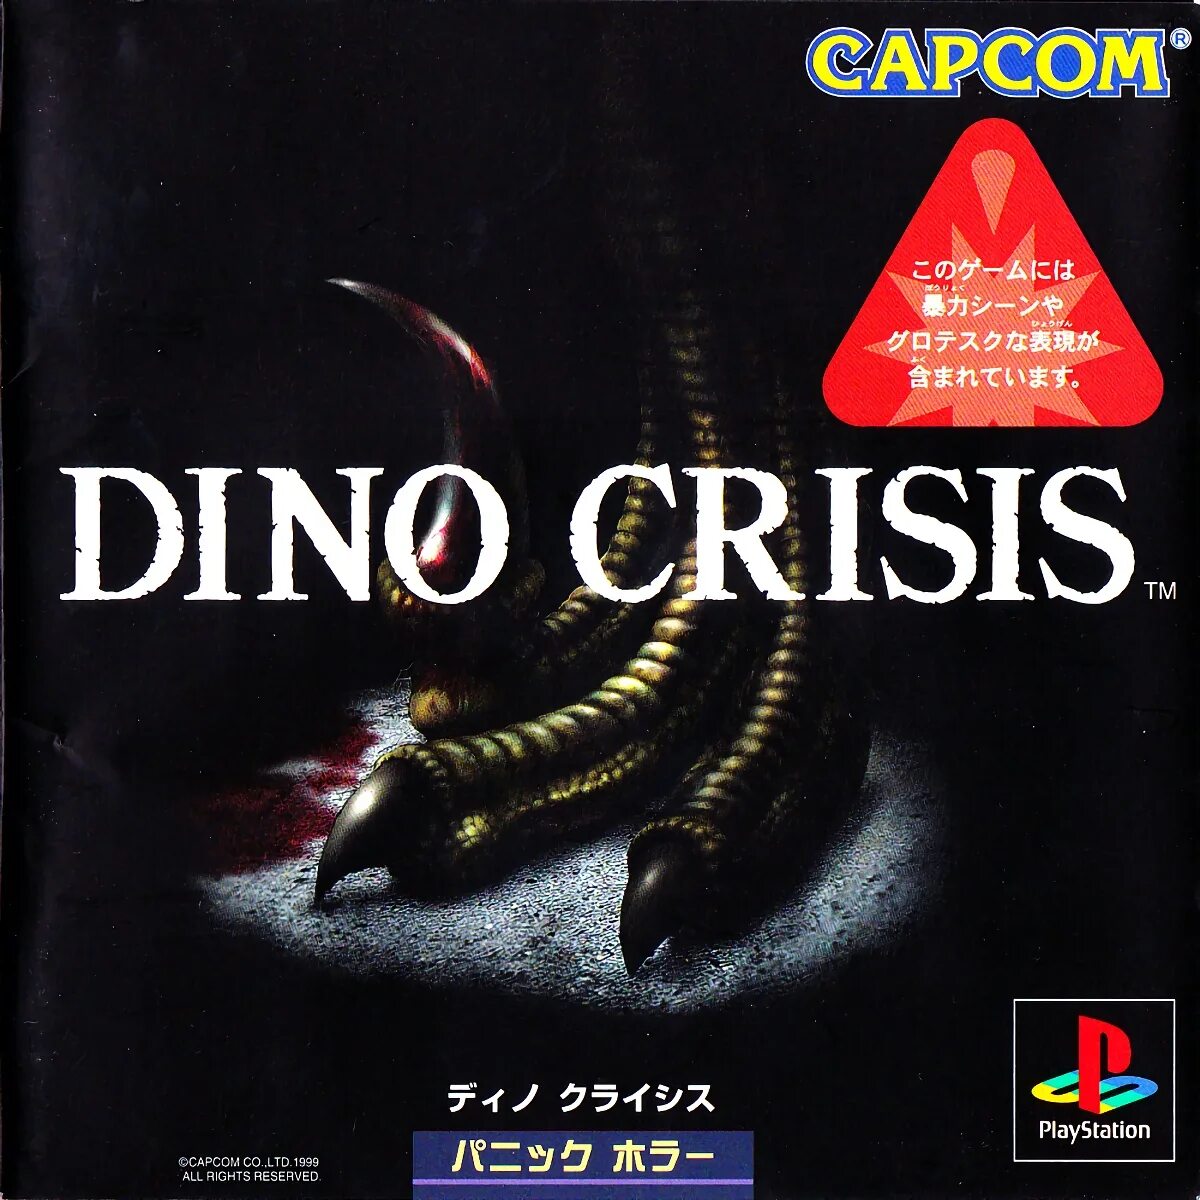 Dino crisis 1. Dino crisis Sony PLAYSTATION 1. Dino crisis ps1 обложка. Dino crisis 1 обложка. Dino crisis на плейстейшен 1.